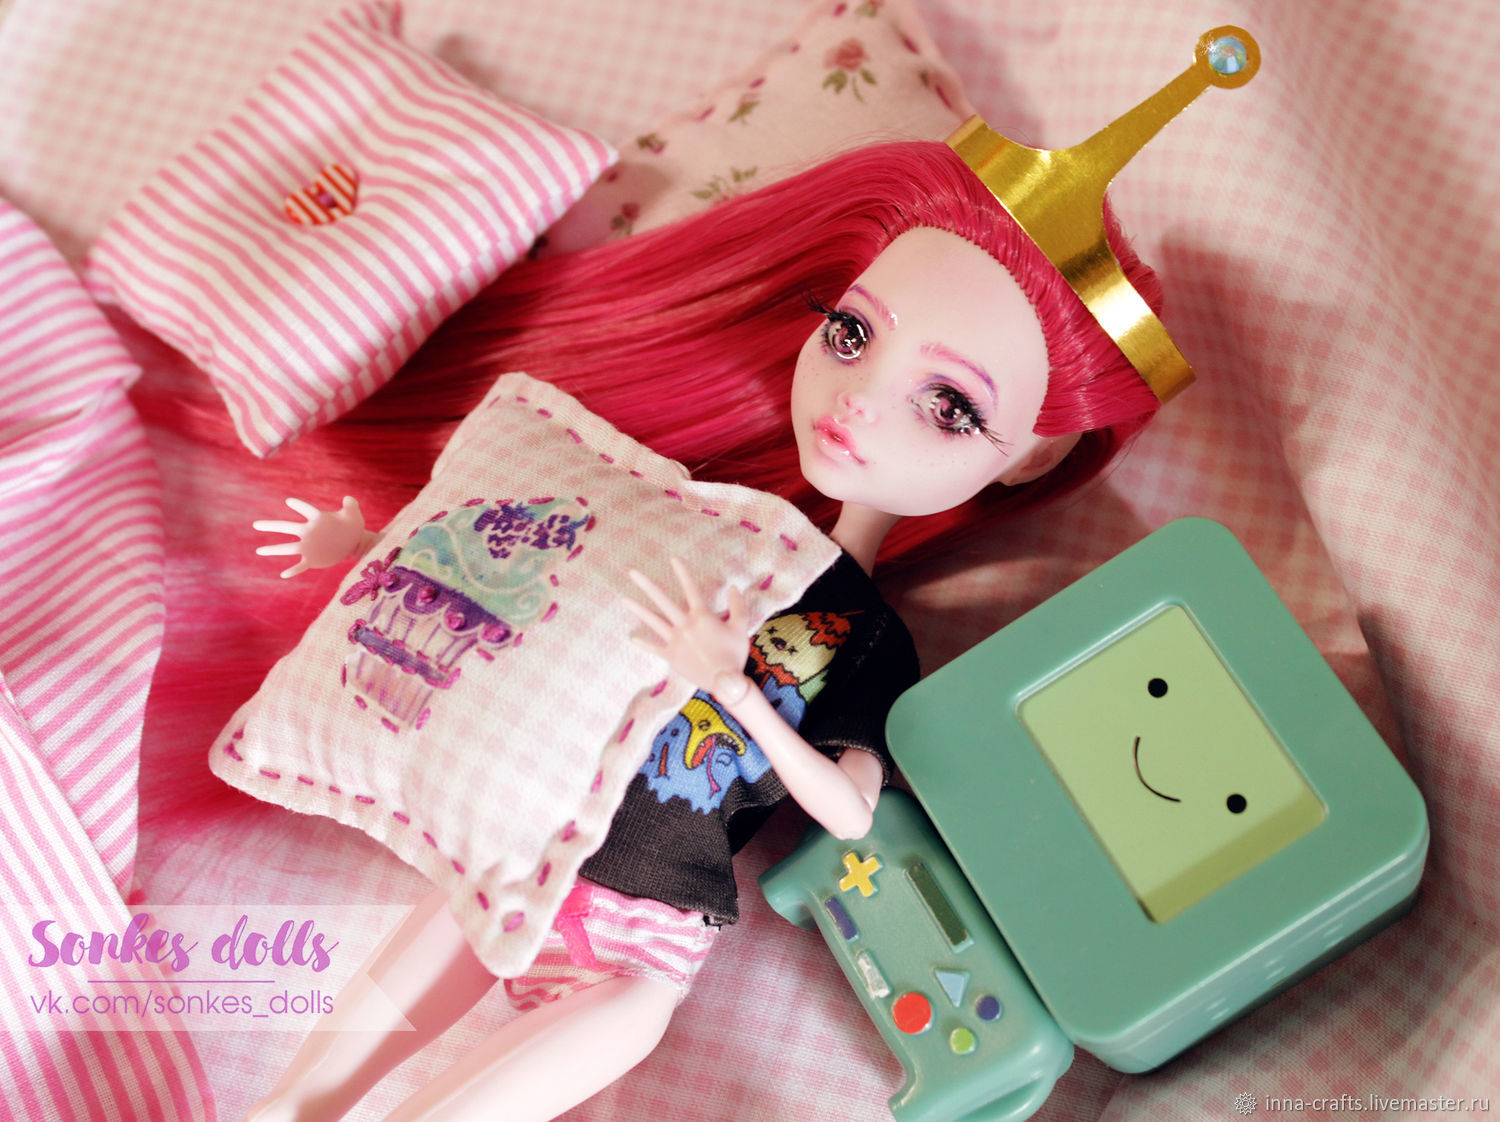 princess bubblegum doll